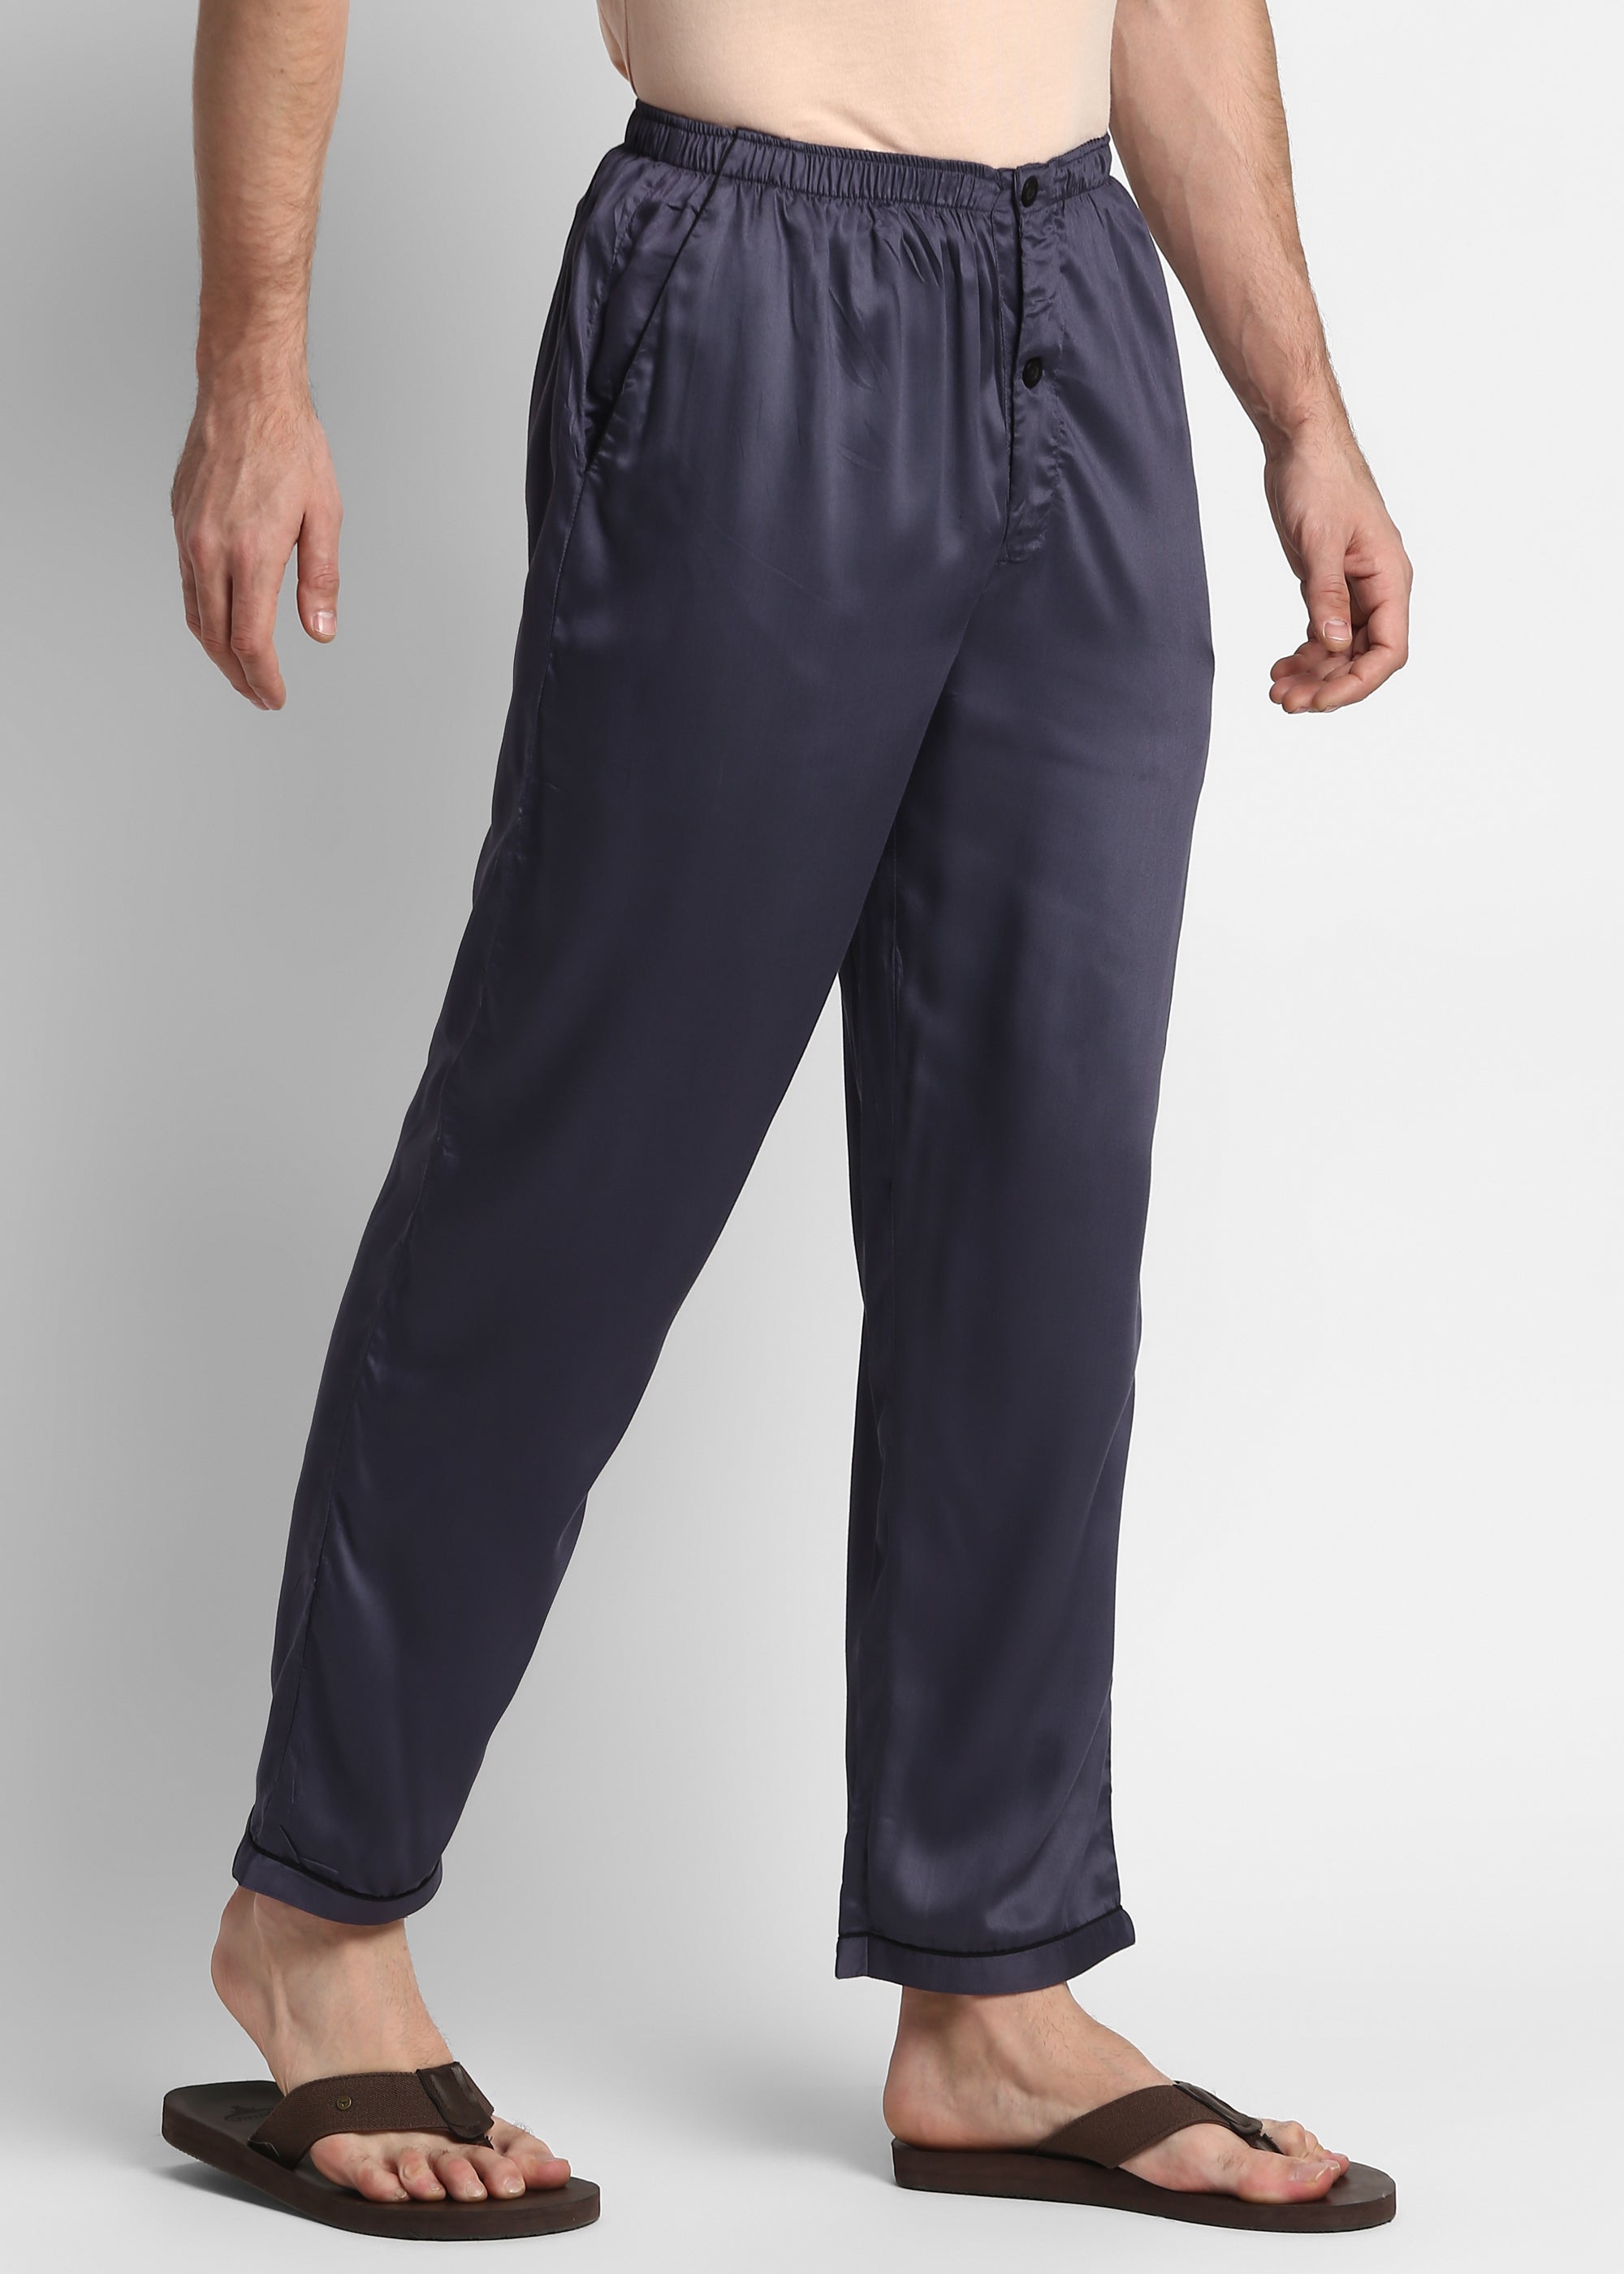 Ultra Soft Dark Grey Modal Satin Men's Pyjama Bottoms - Shopbloom